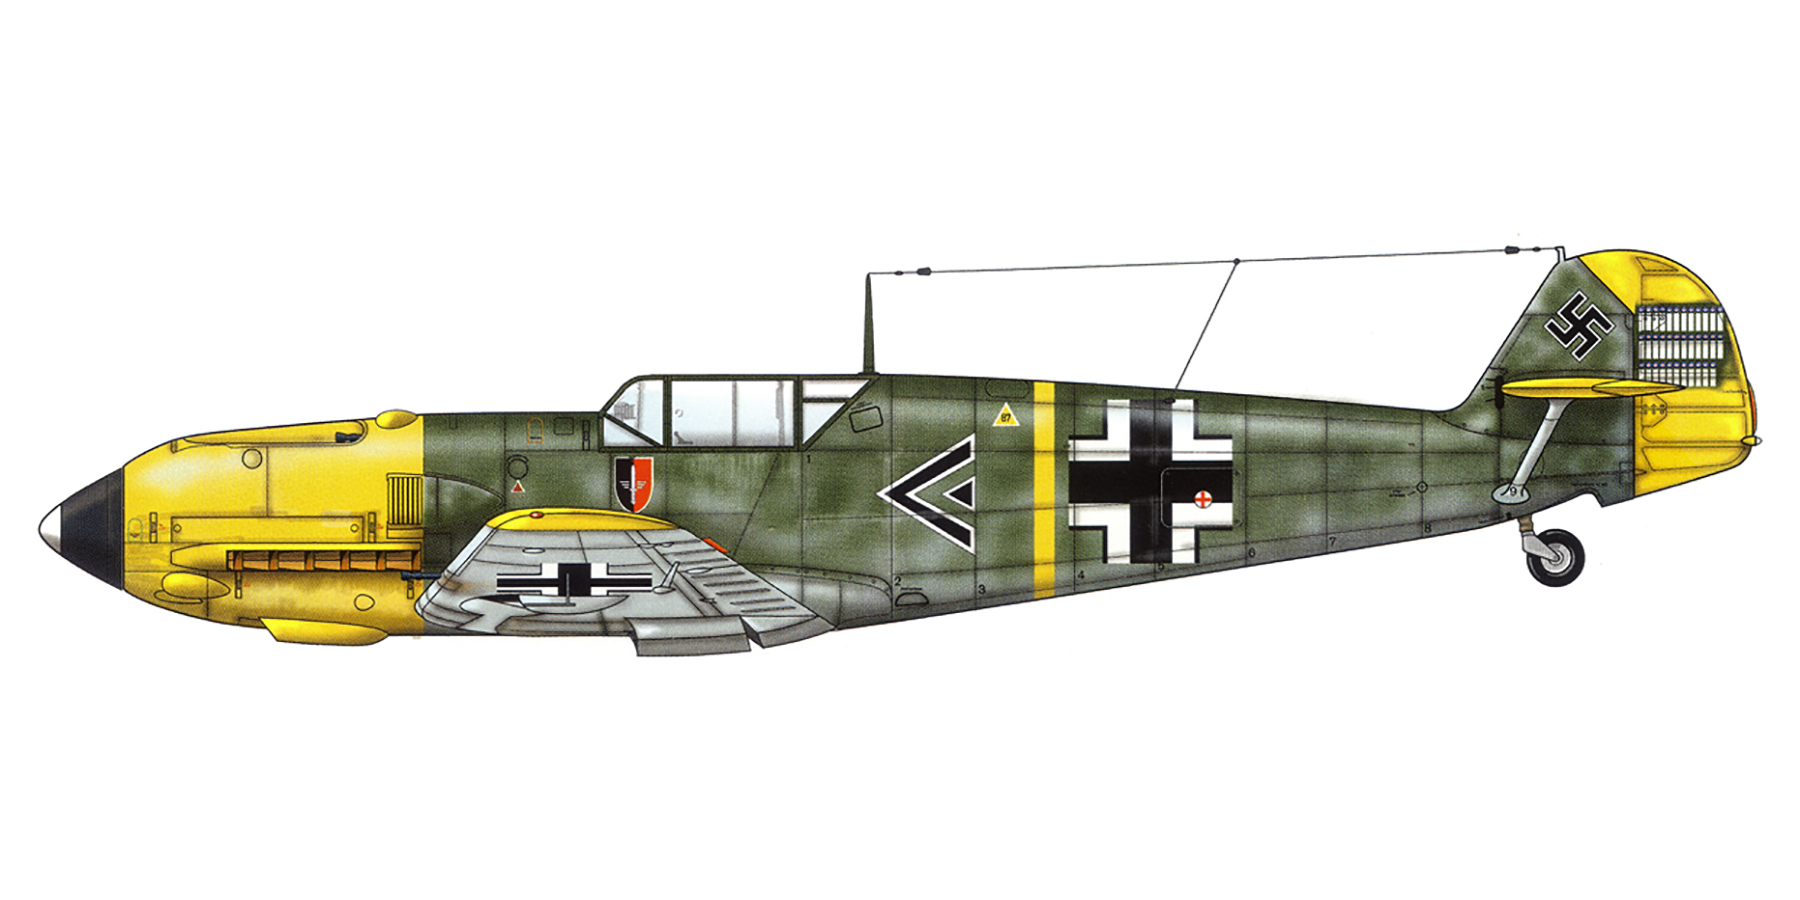 Messerschmitt Bf 109E3 Stab I.LG2 Kommandeur Herbert Ihlefeld WNr 5057 Calsis Mark Mar 1941 0B